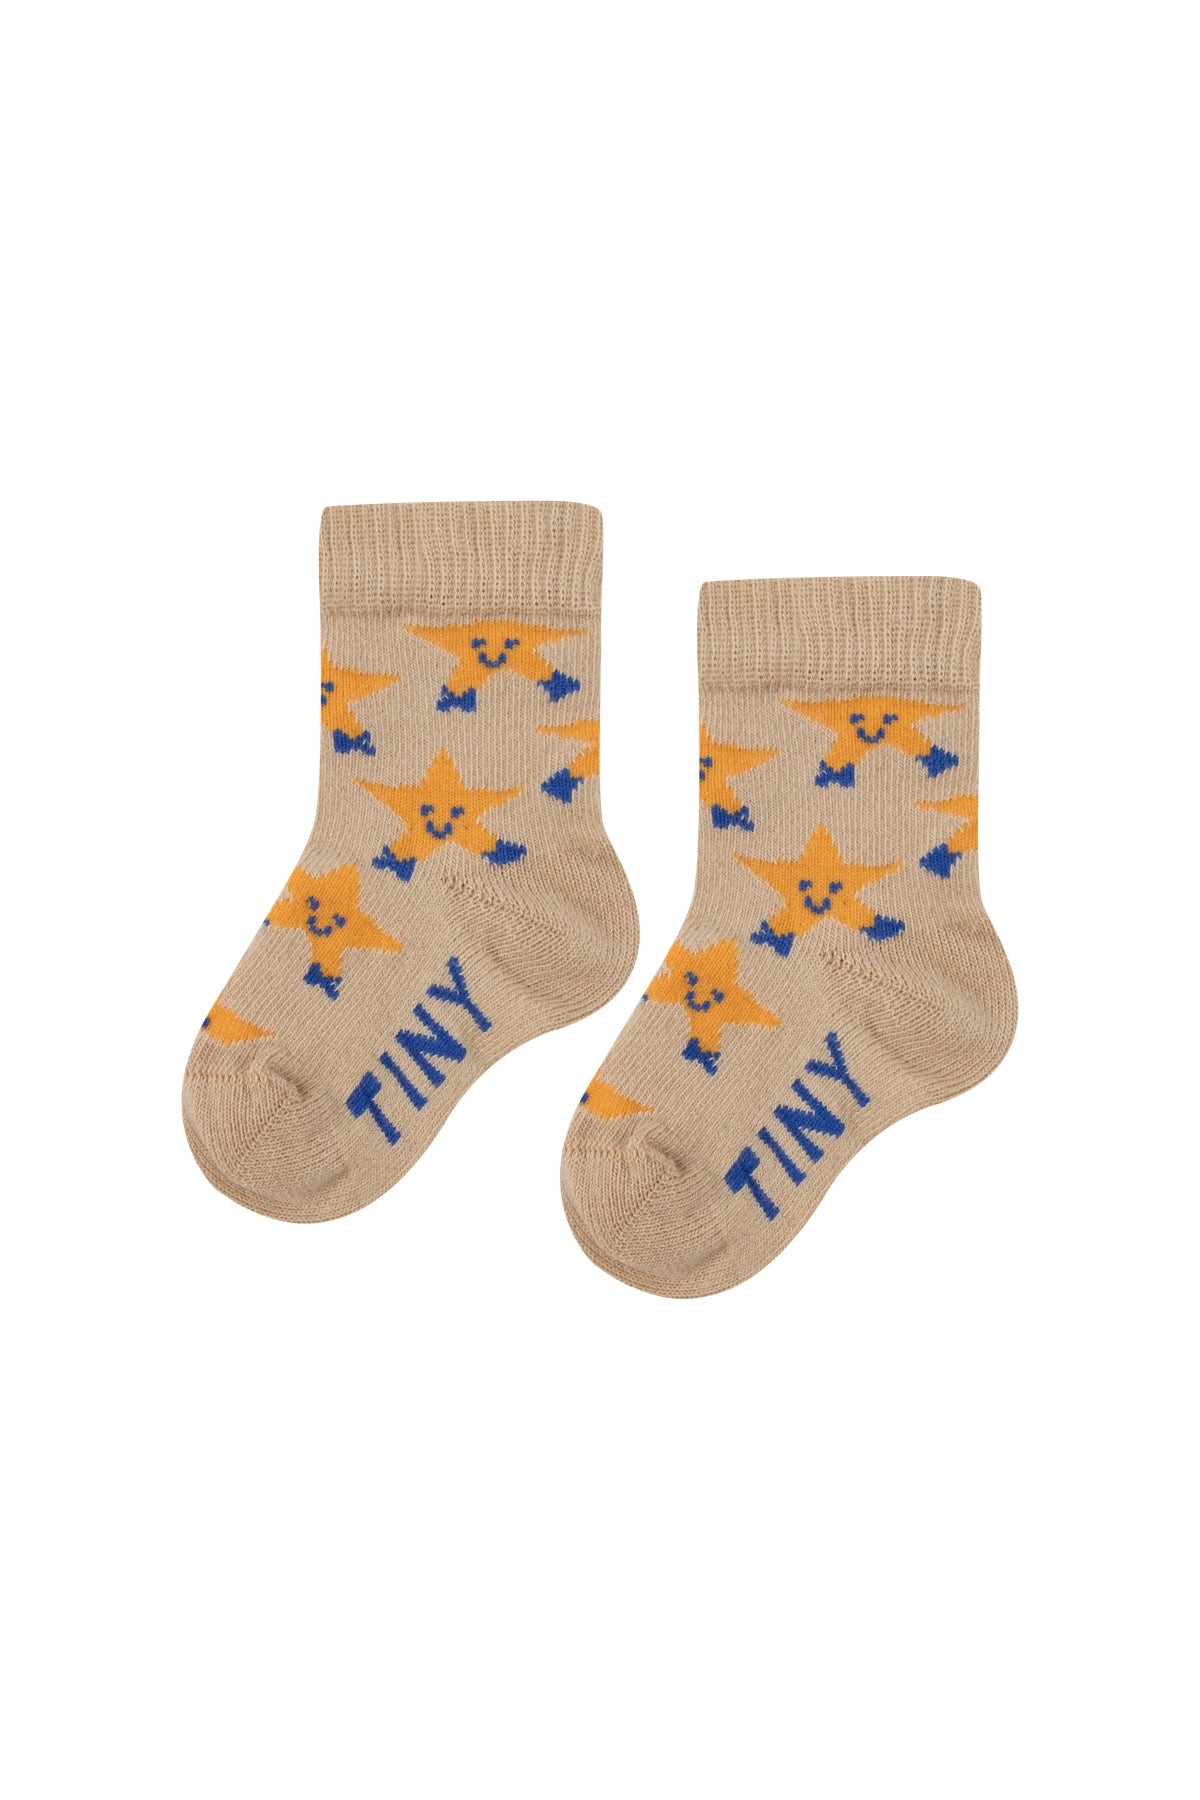 Tiny Cottons - dancing stars socks - vanilla